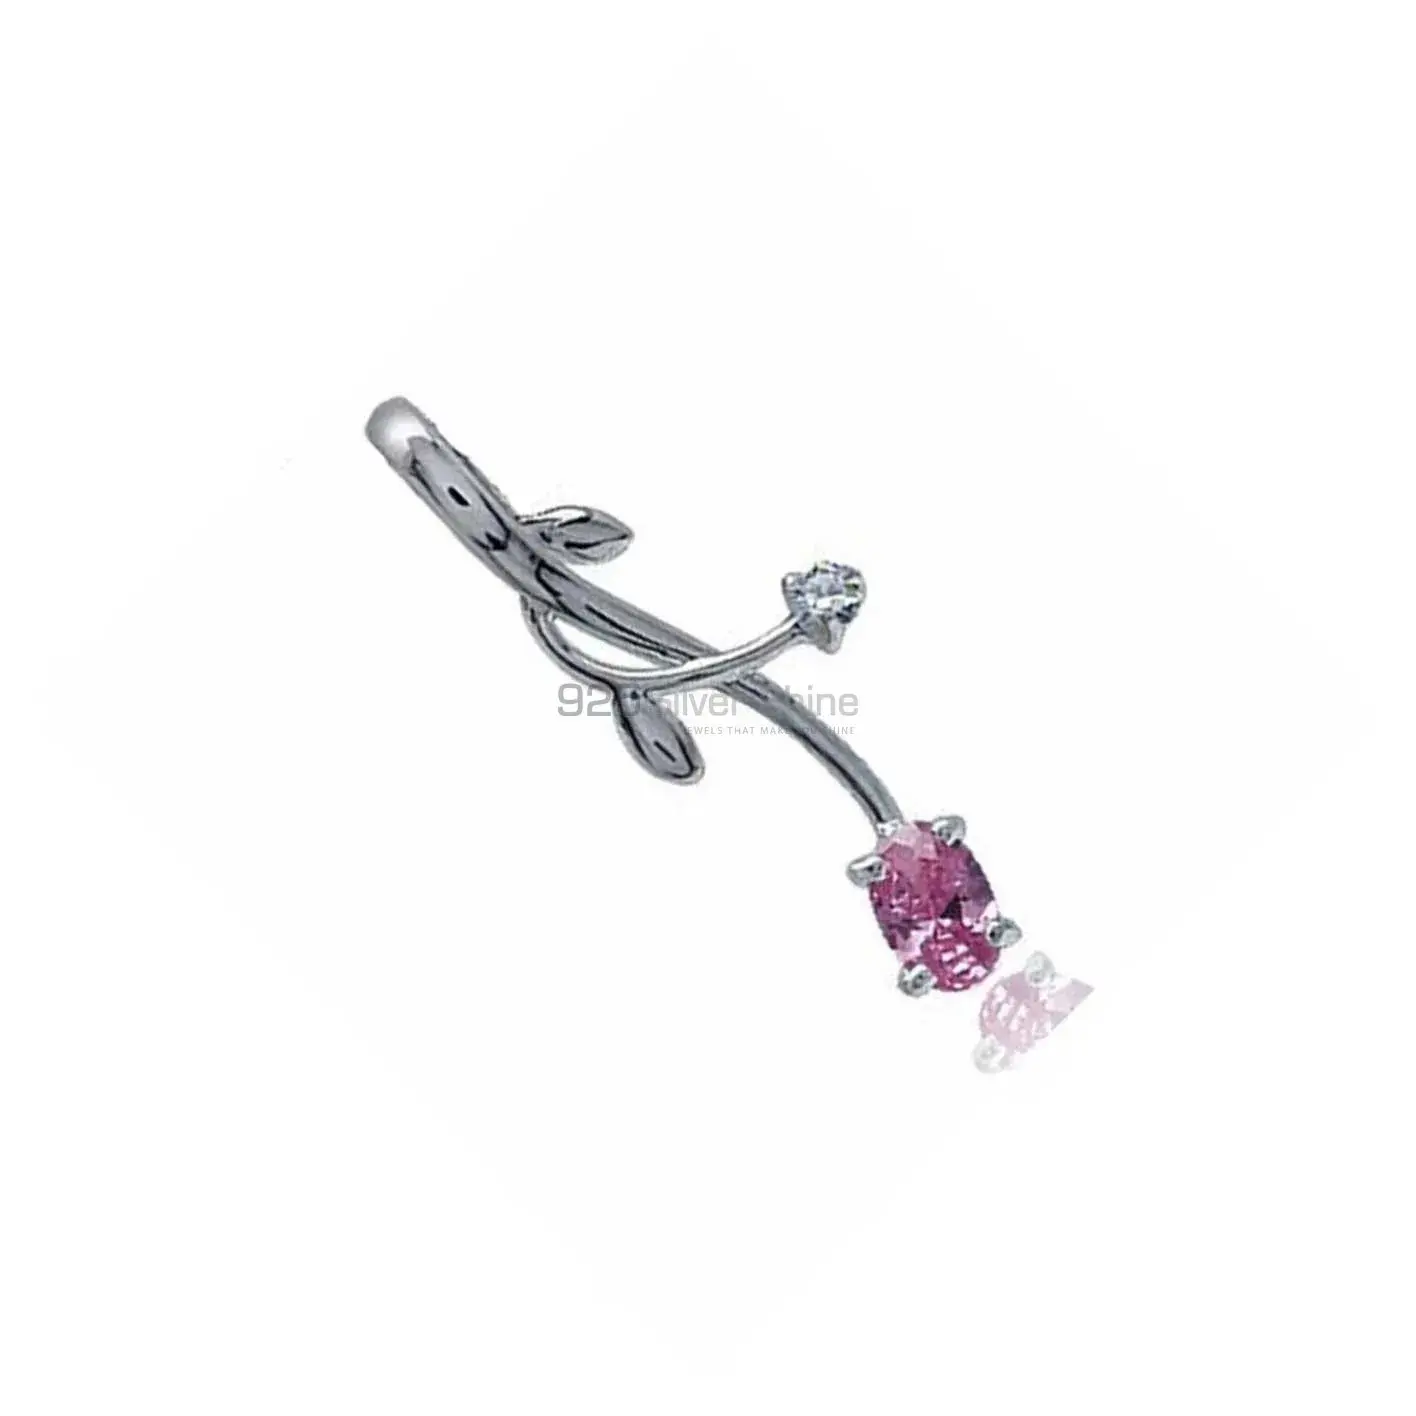 Best Quality 925 Sterling Silver Handmade Pendants In Pink Tourmaline Gemstone Jewelry 925SP05_2